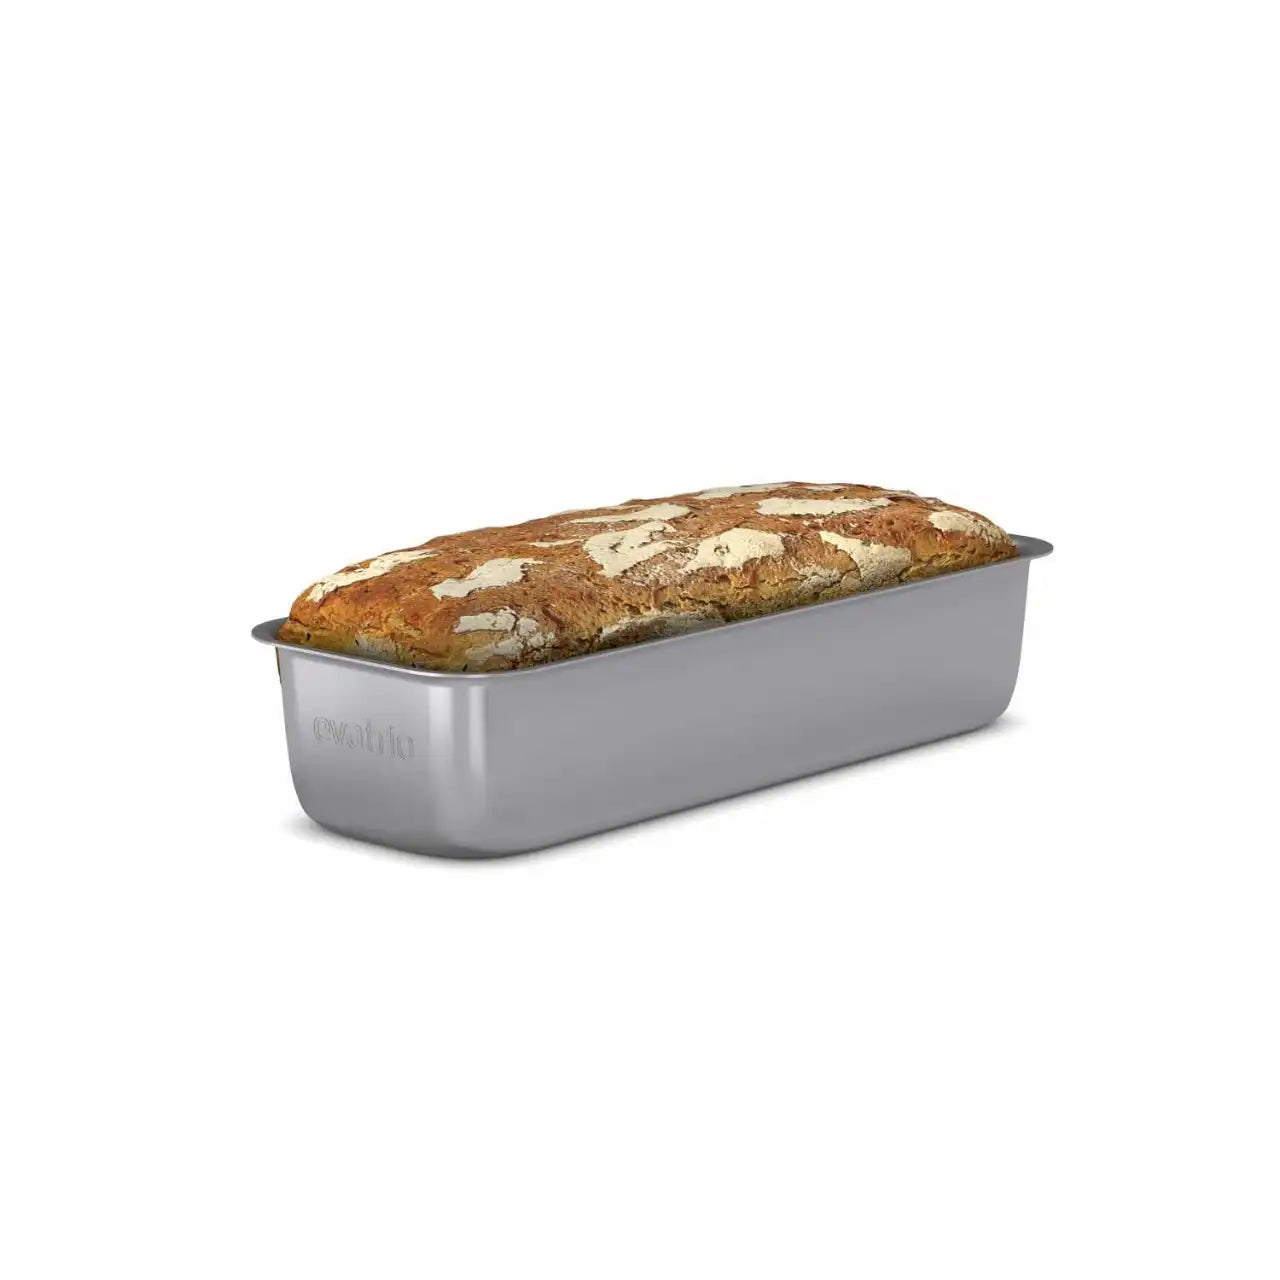 Eva Solo keramische Brot-/Kuchenform, 1,75L